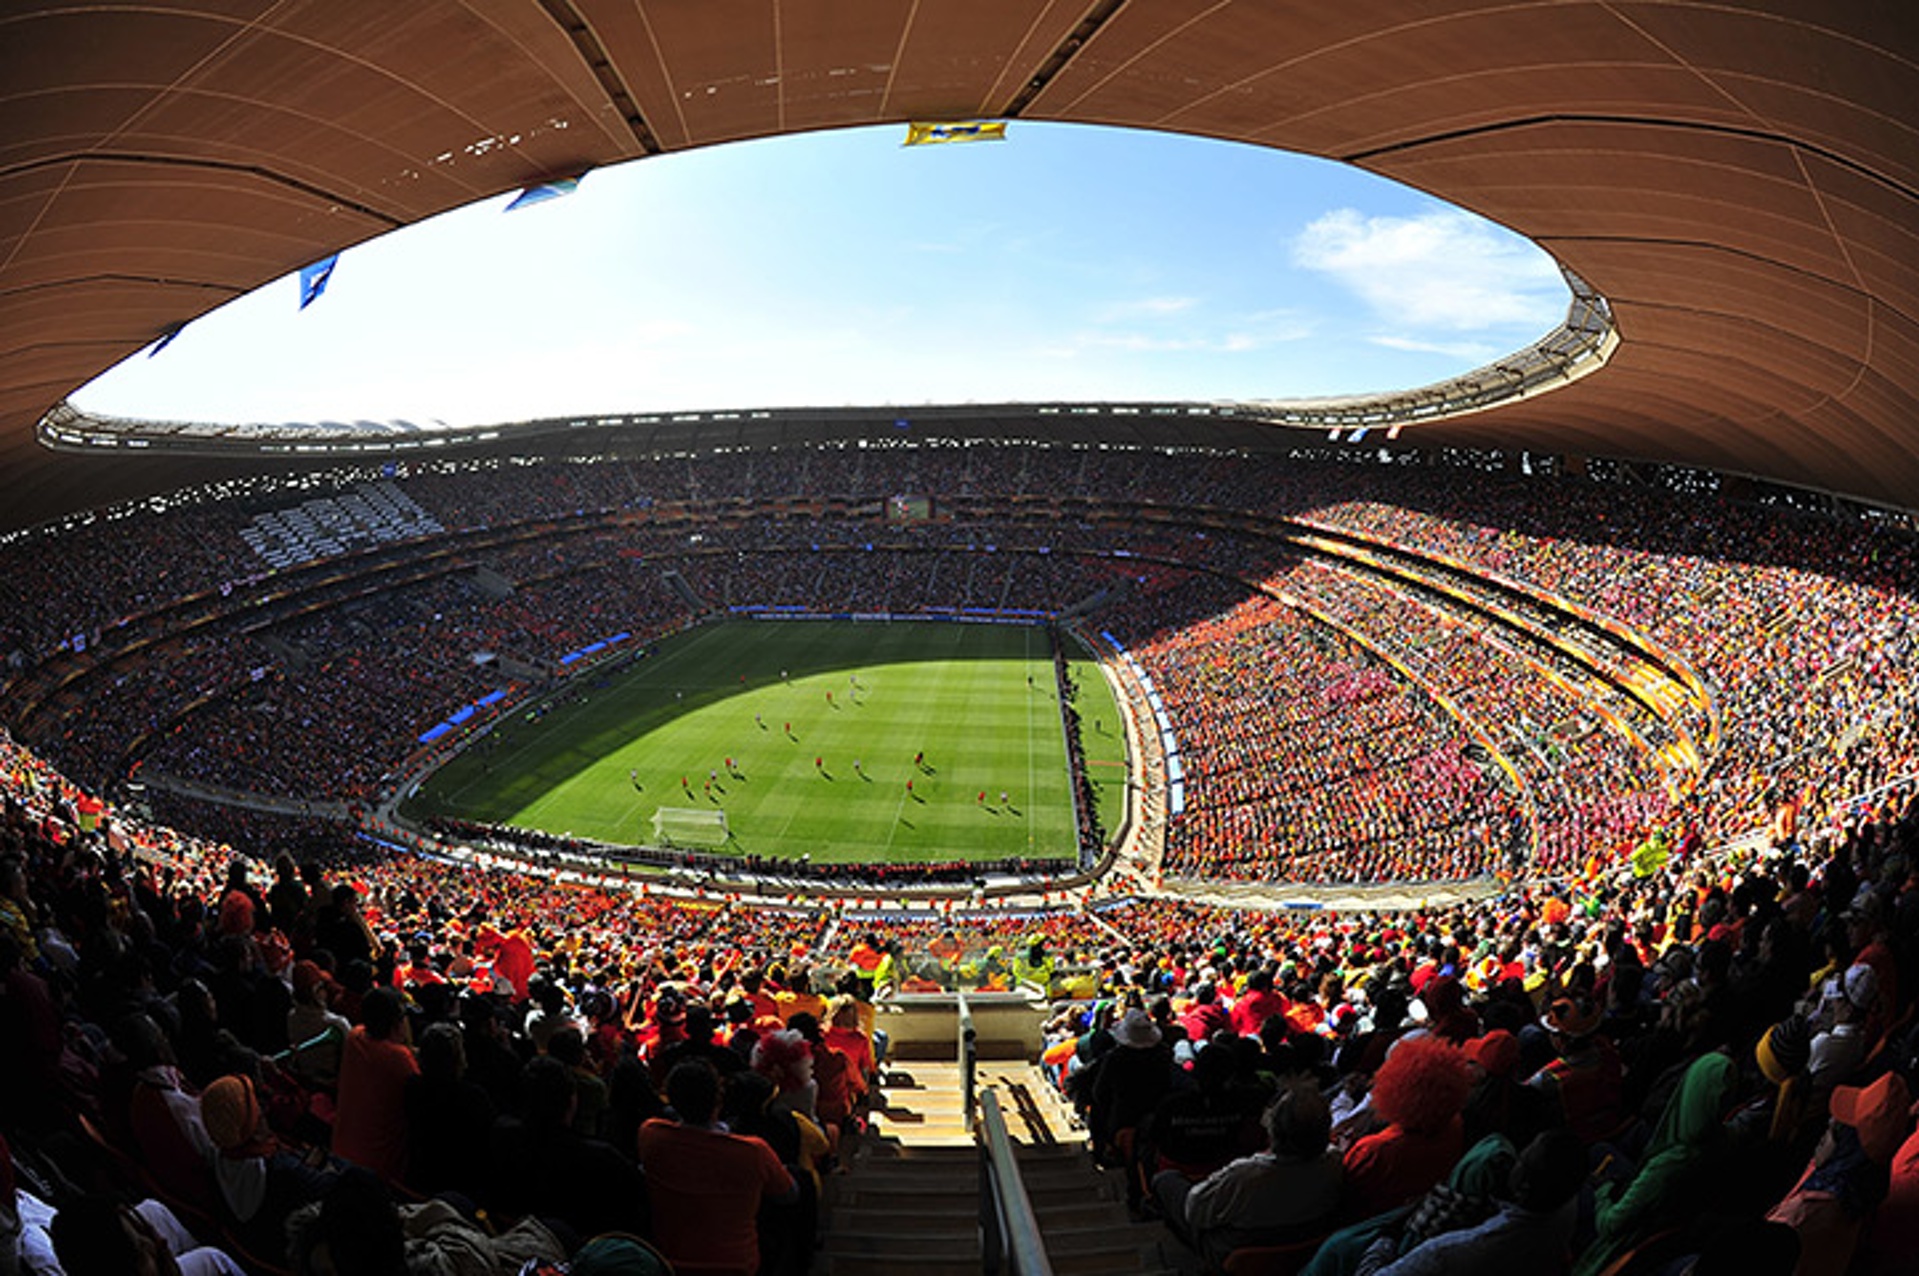 Стадион выше. Стадион СОККЕР Сити Йоханнесбург. ФНБ Стэдиум Йоханнесбург. СОККЕР Сити стадион ЮАР. Стадион Роуз Боул в США.